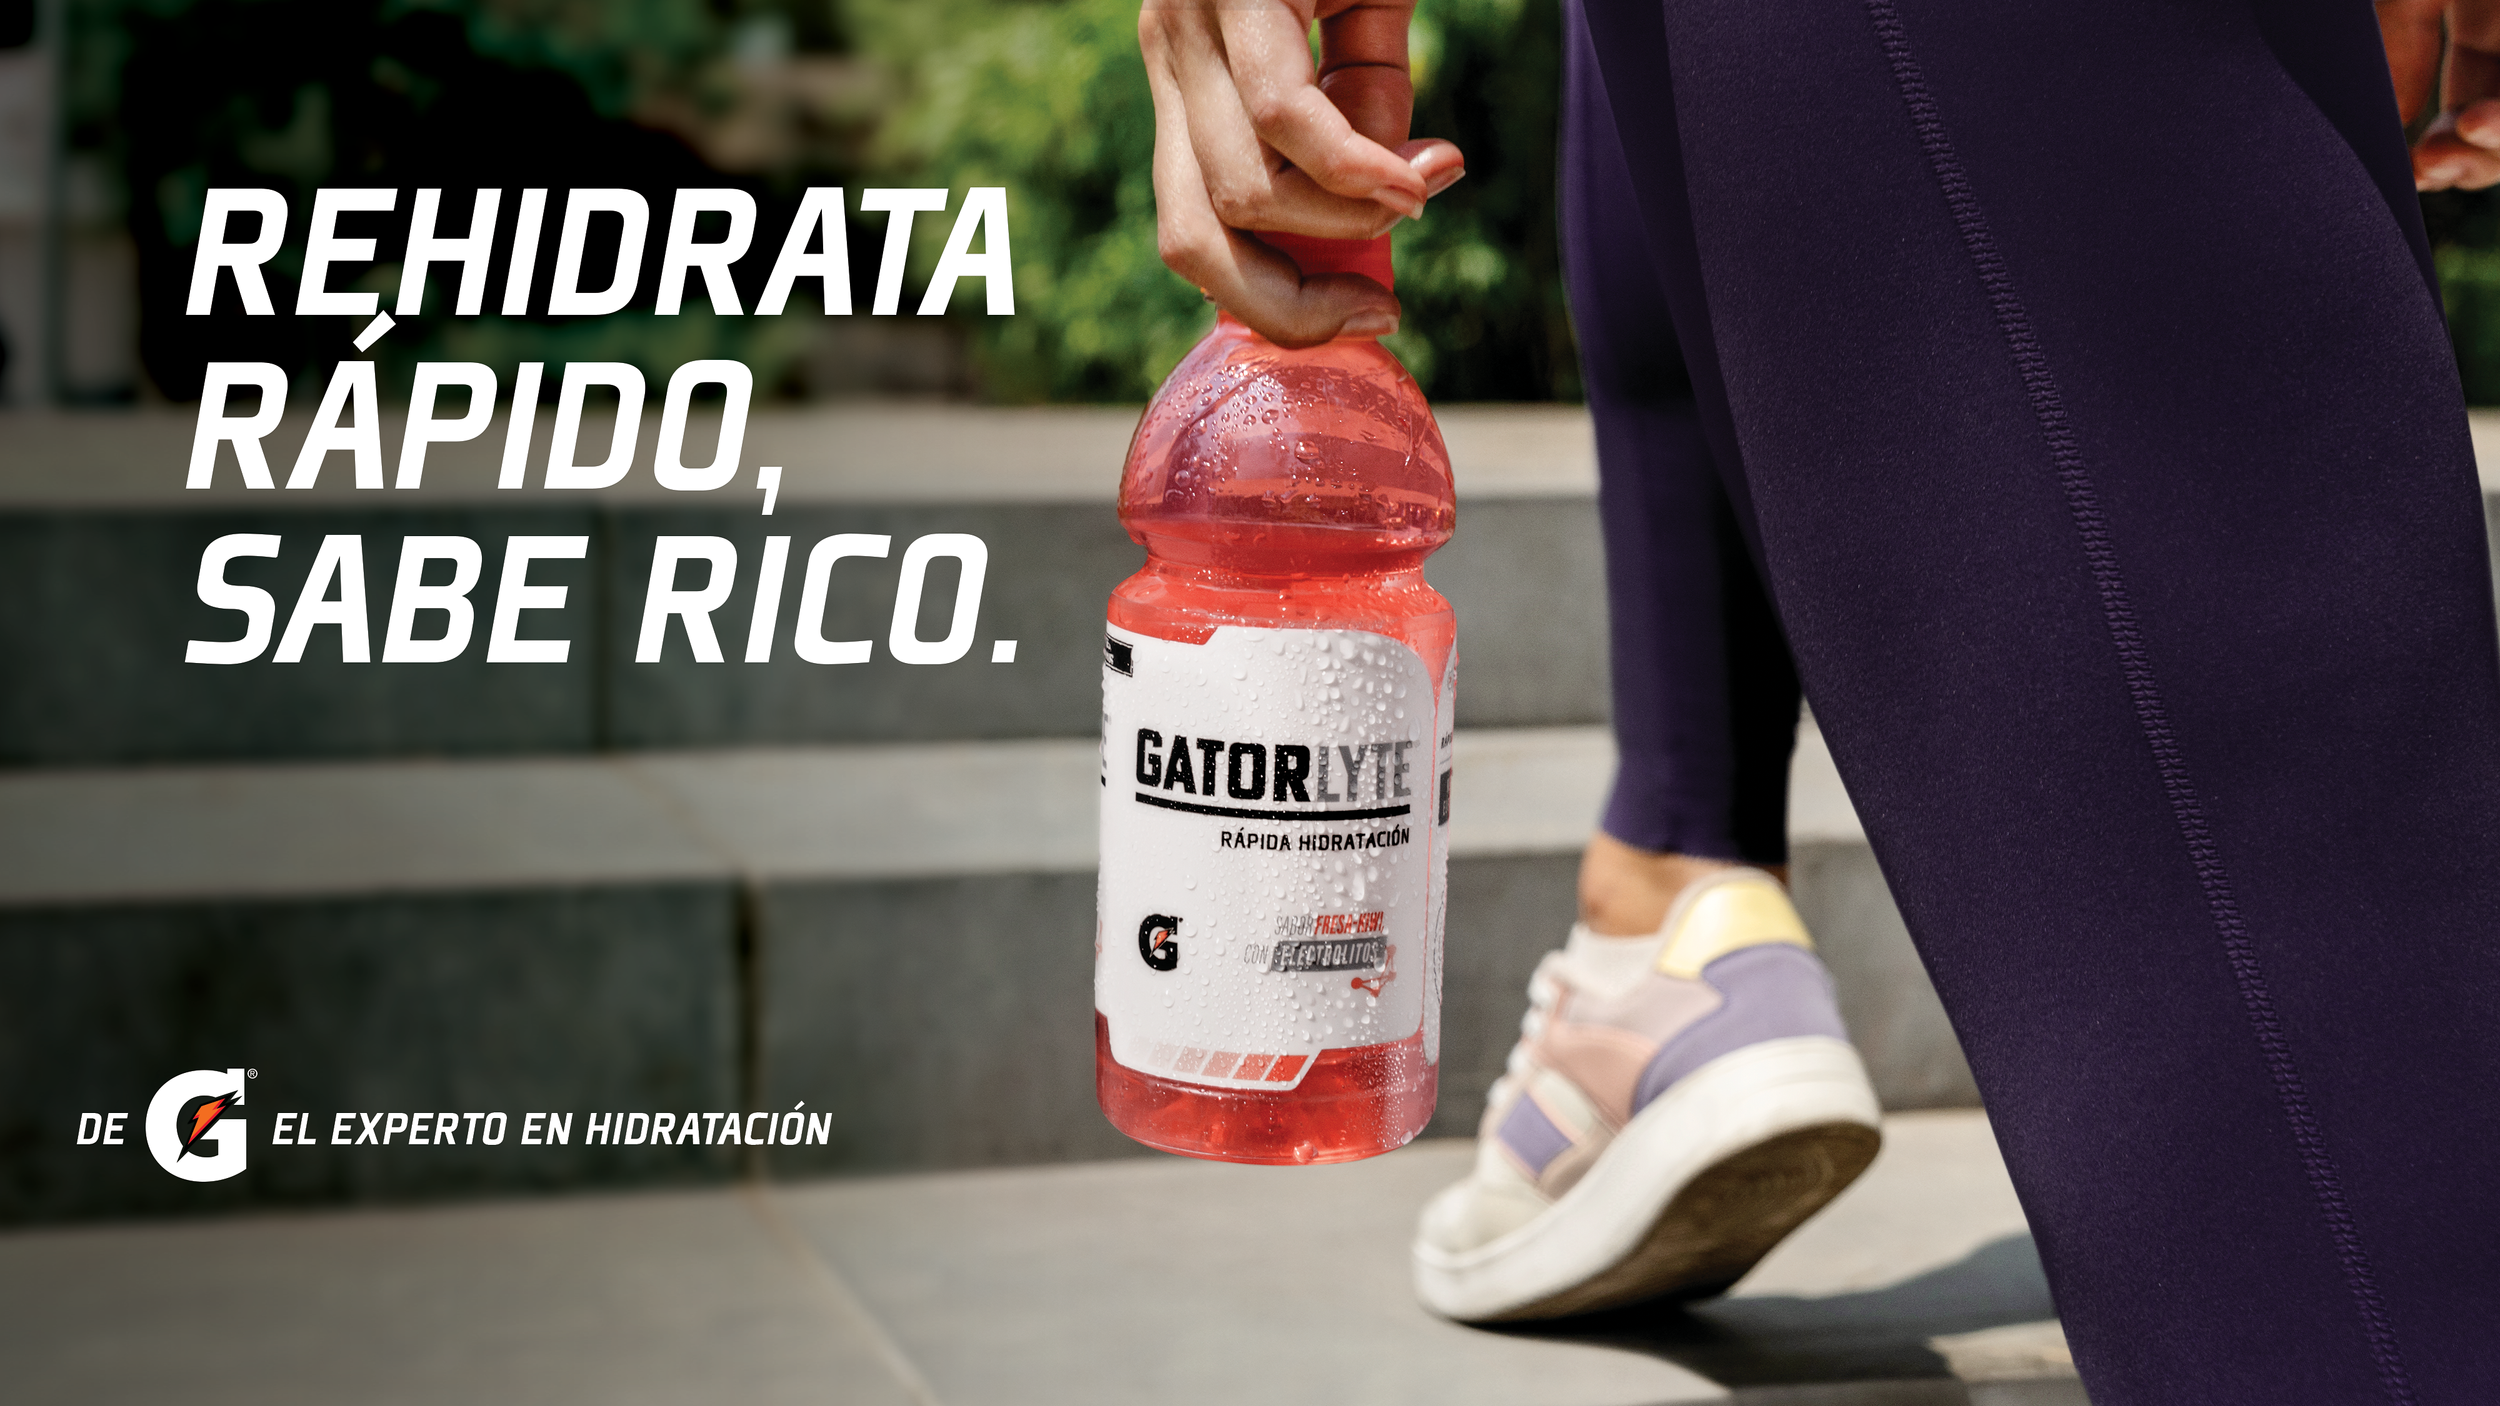 Gatorlyte | Rehidrata Rápido, Sabe Rico.